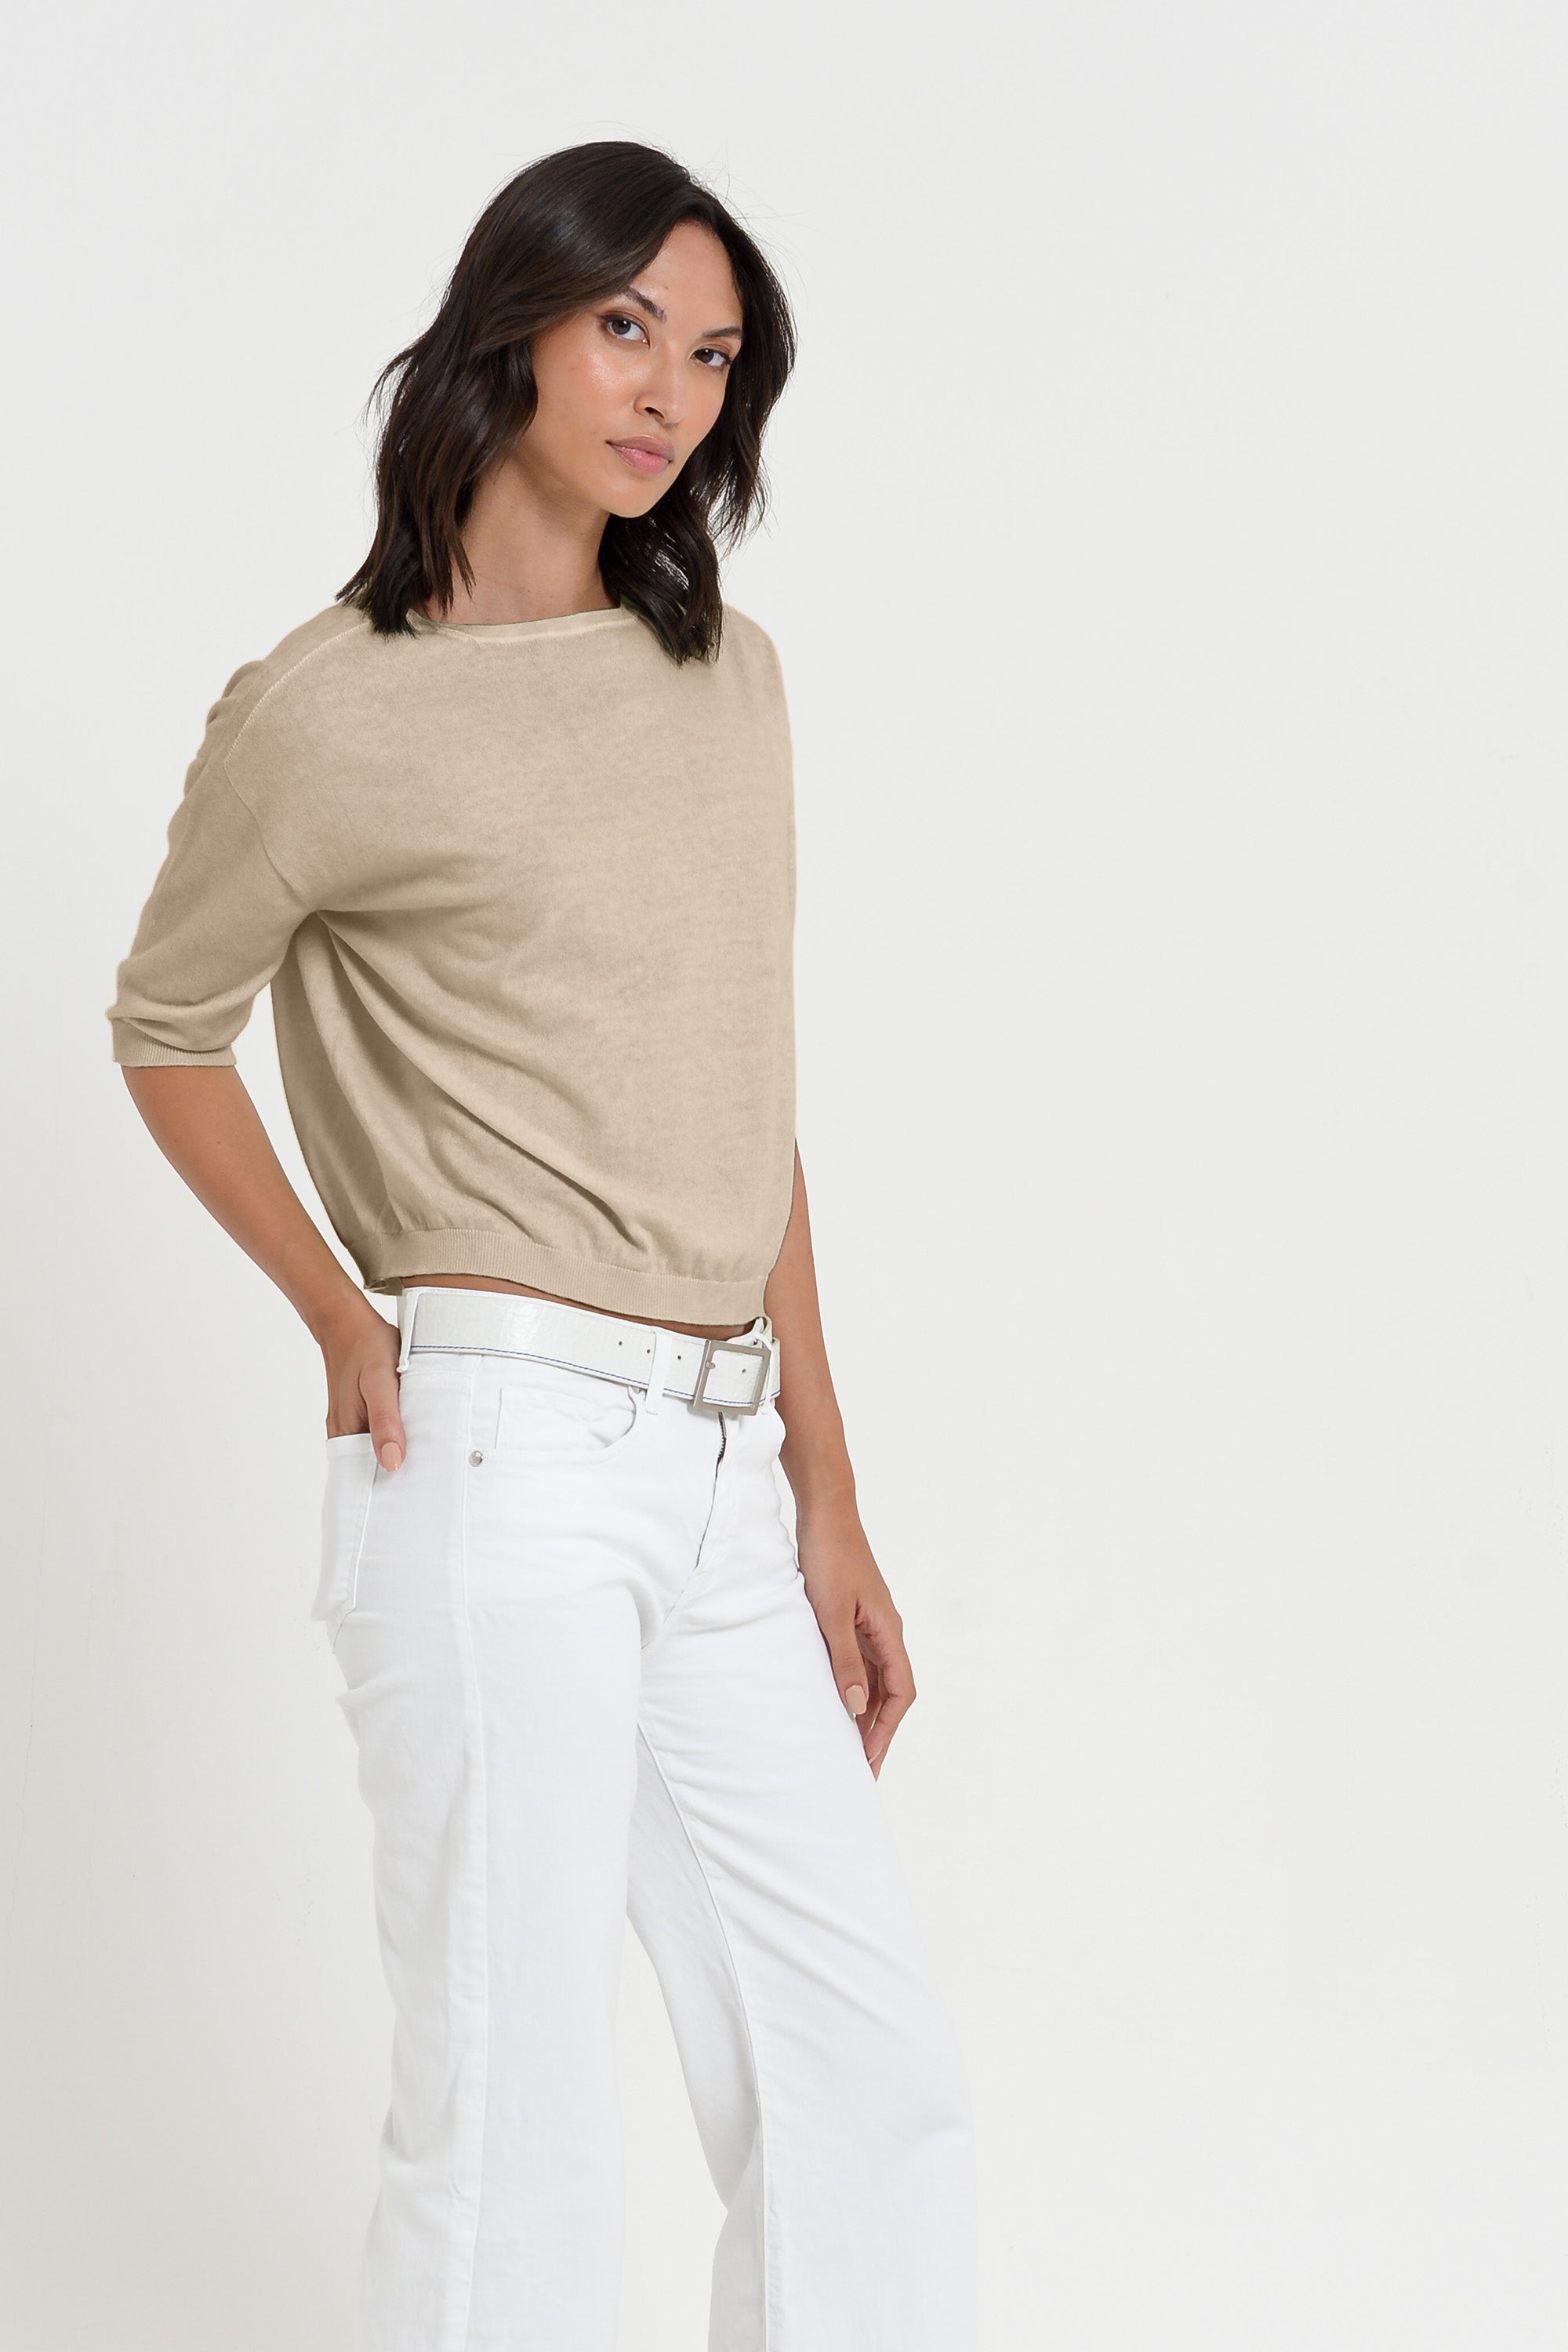 Kriss Knit - Women's Short Sleeve Cropped Sweater - Harbor